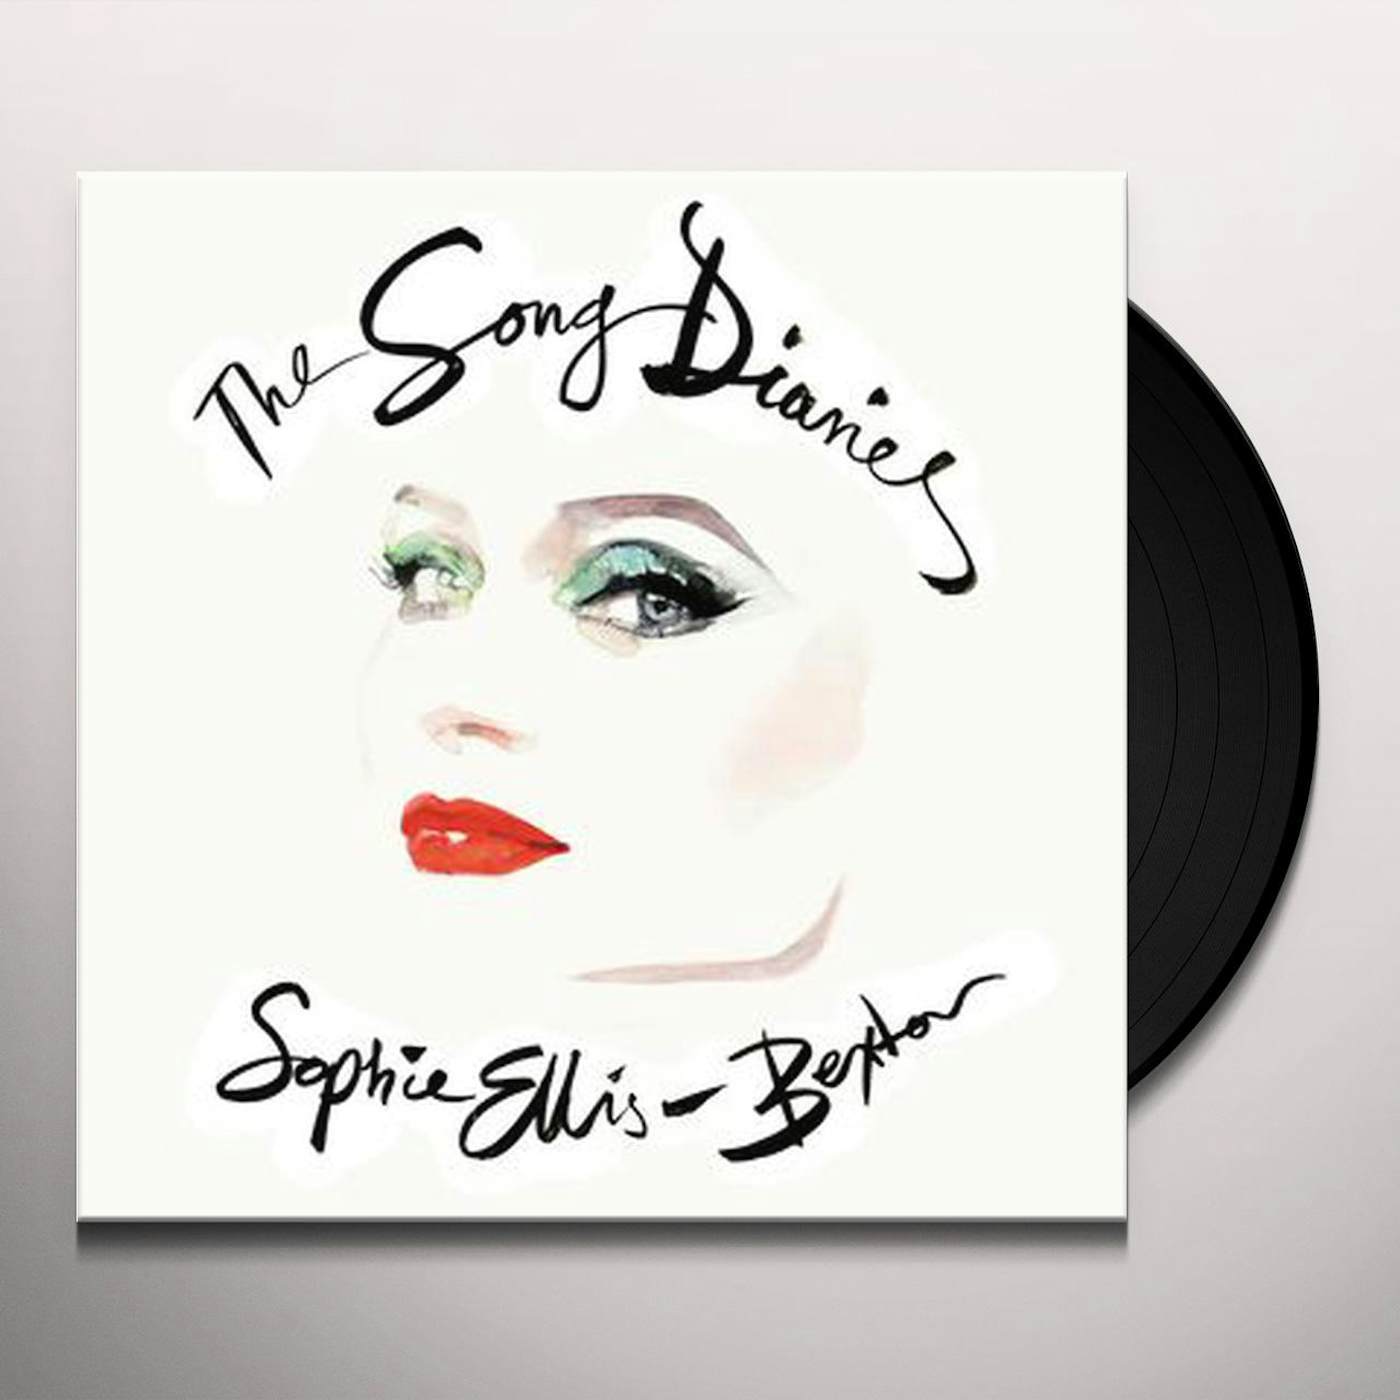 Kylie Minogue - Kylie Minogue - Disco: Guest List Edition Vinyl 3LP - Sound  of Vinyl